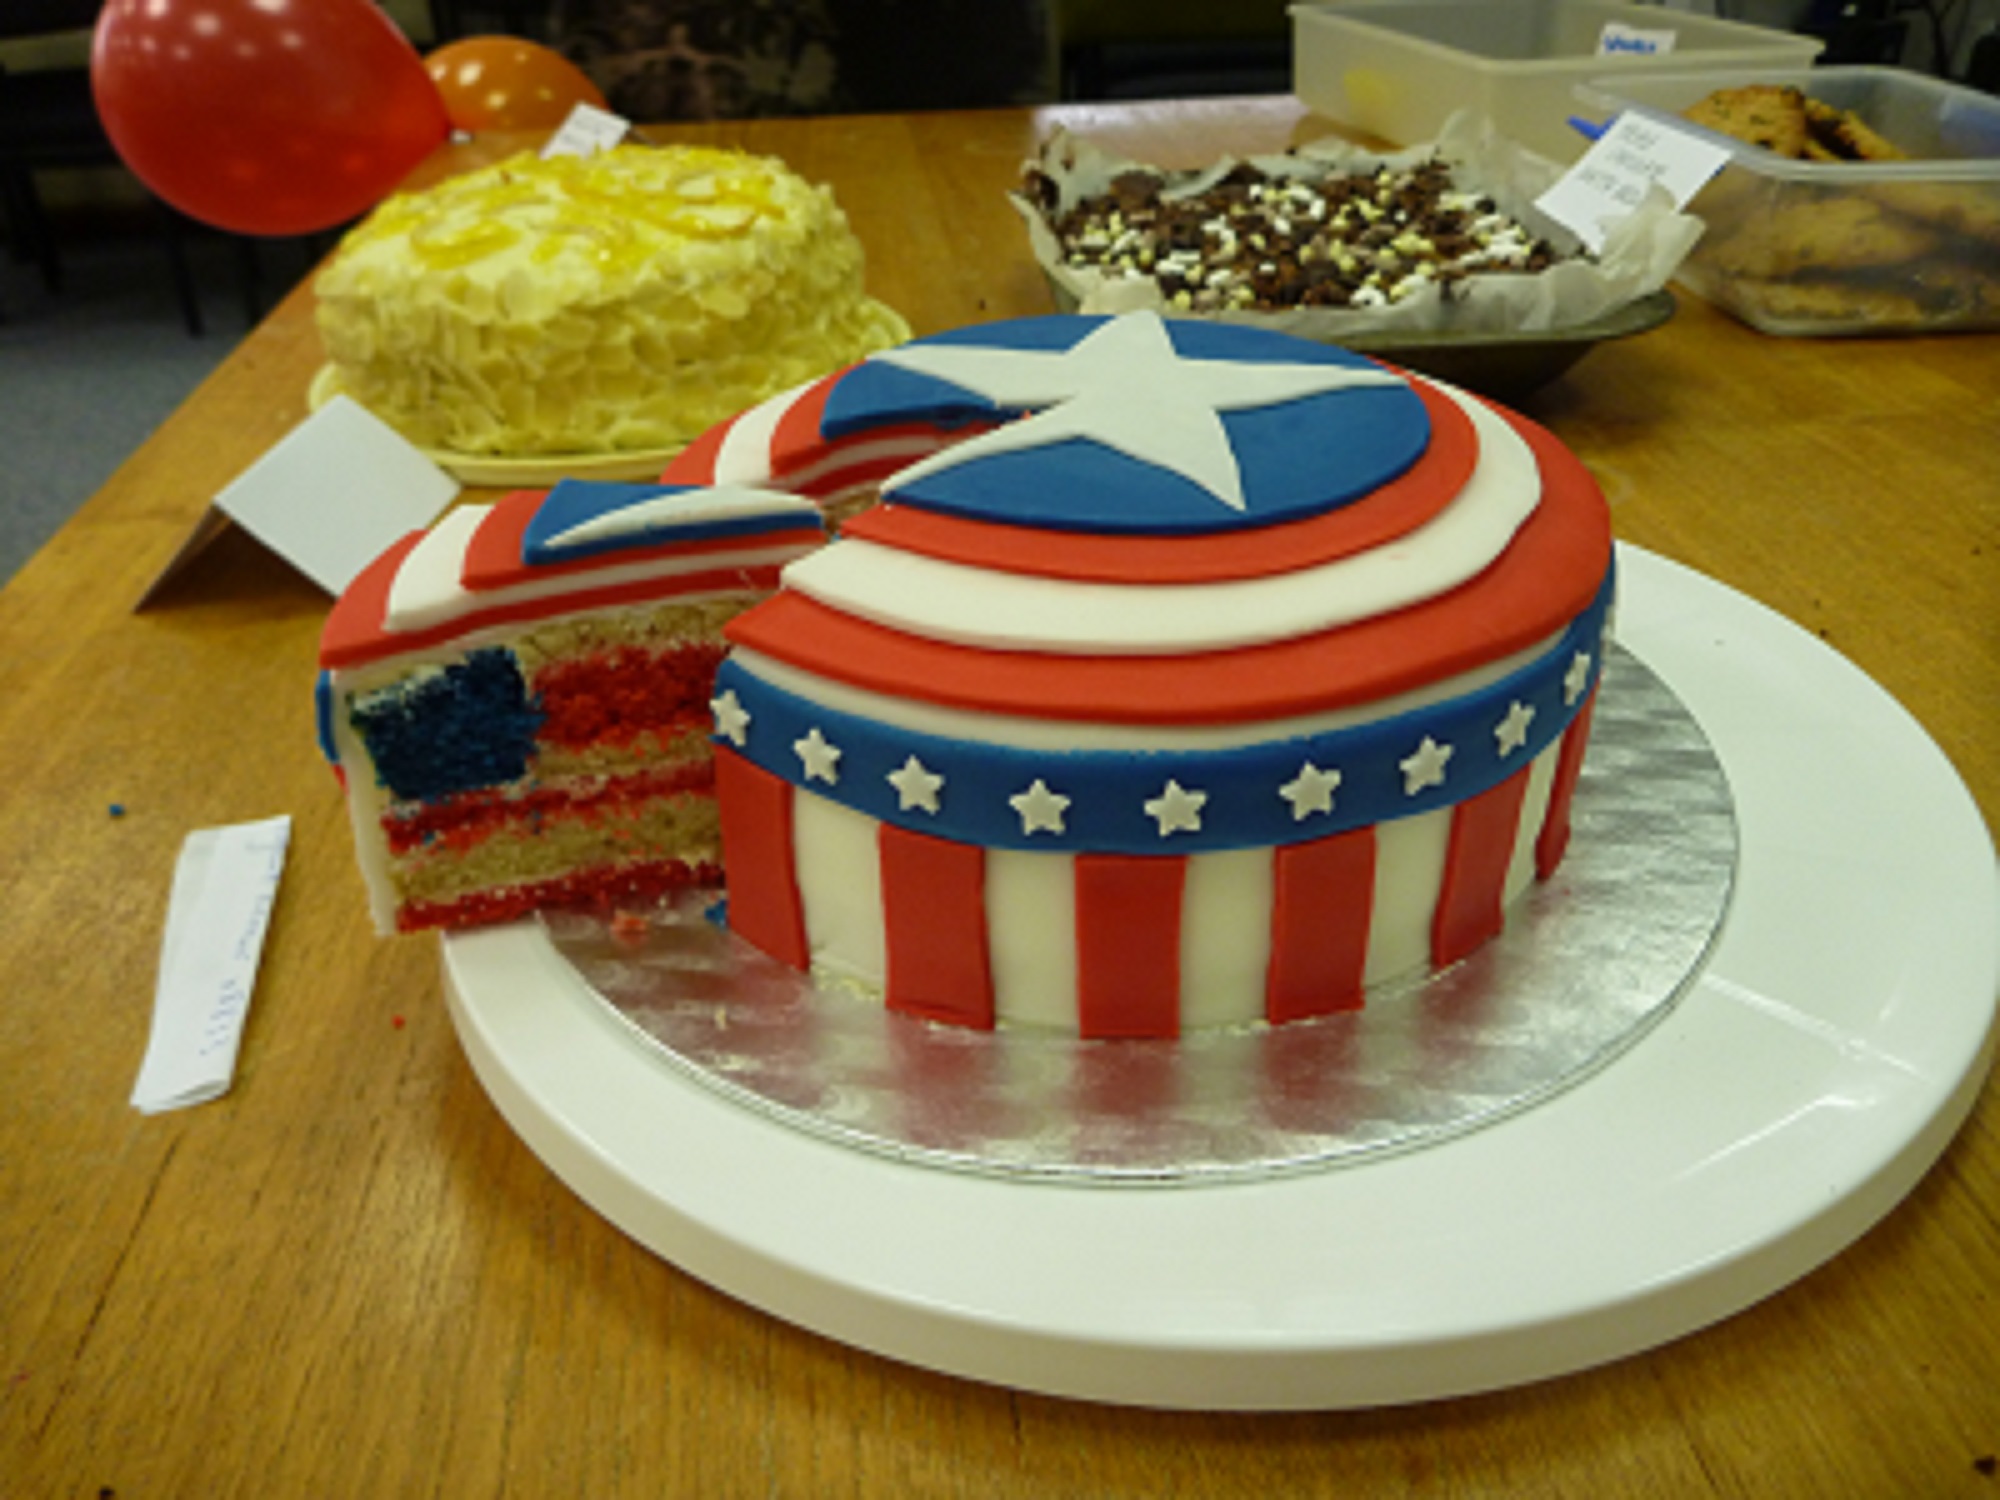 Captain America Cake_Margaret Ferrier__University Hospital Southampton - Copy